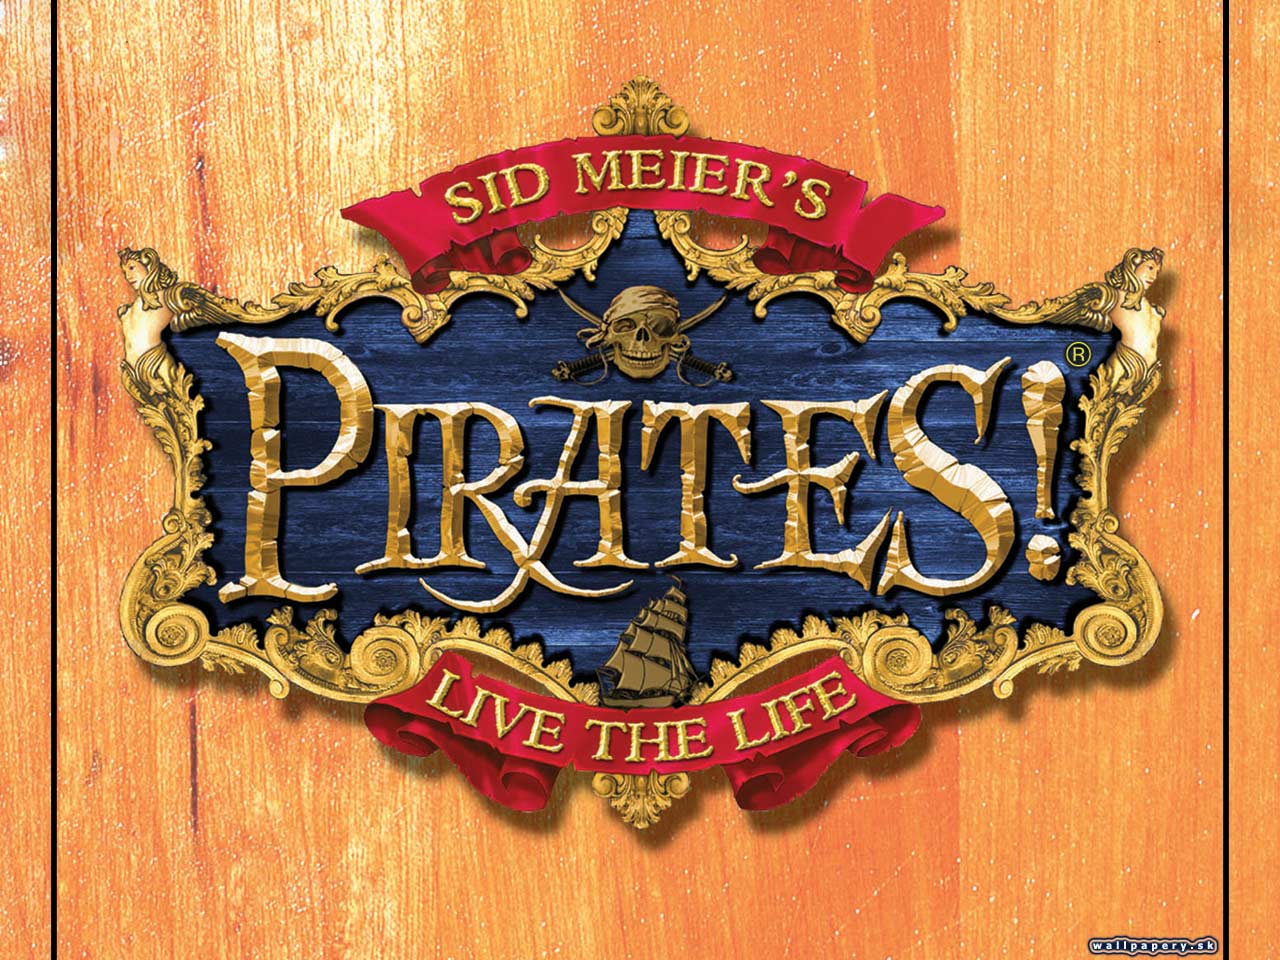 Sid Meier's Pirates! - wallpaper 4